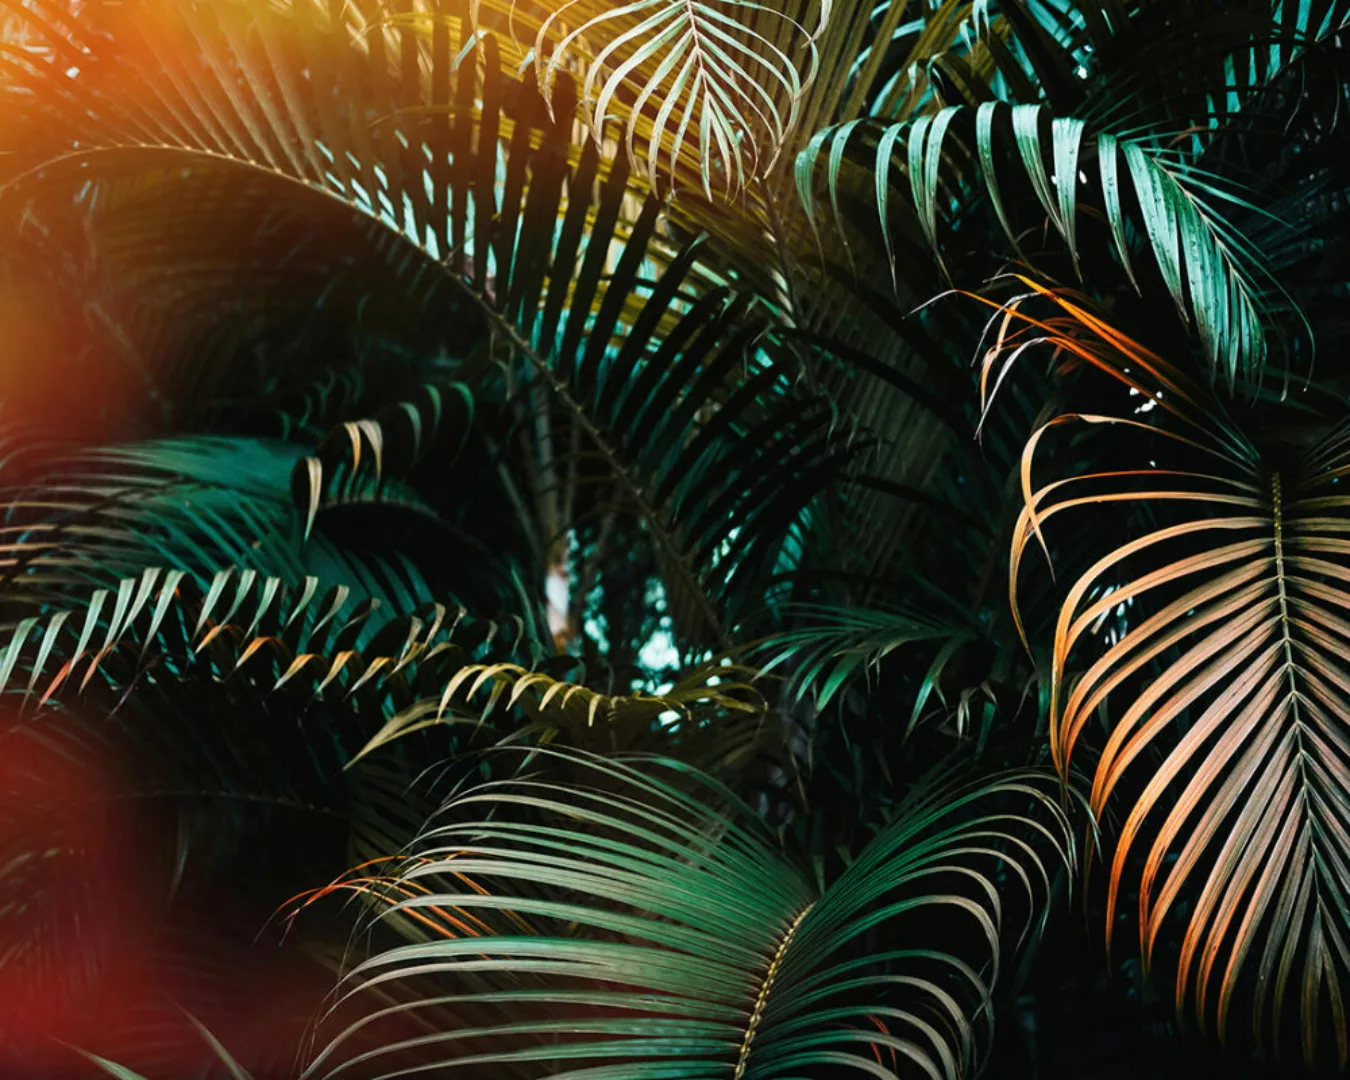 Fototapete "Jungle colour" 3,50x2,55 m / Glattvlies Profi günstig online kaufen